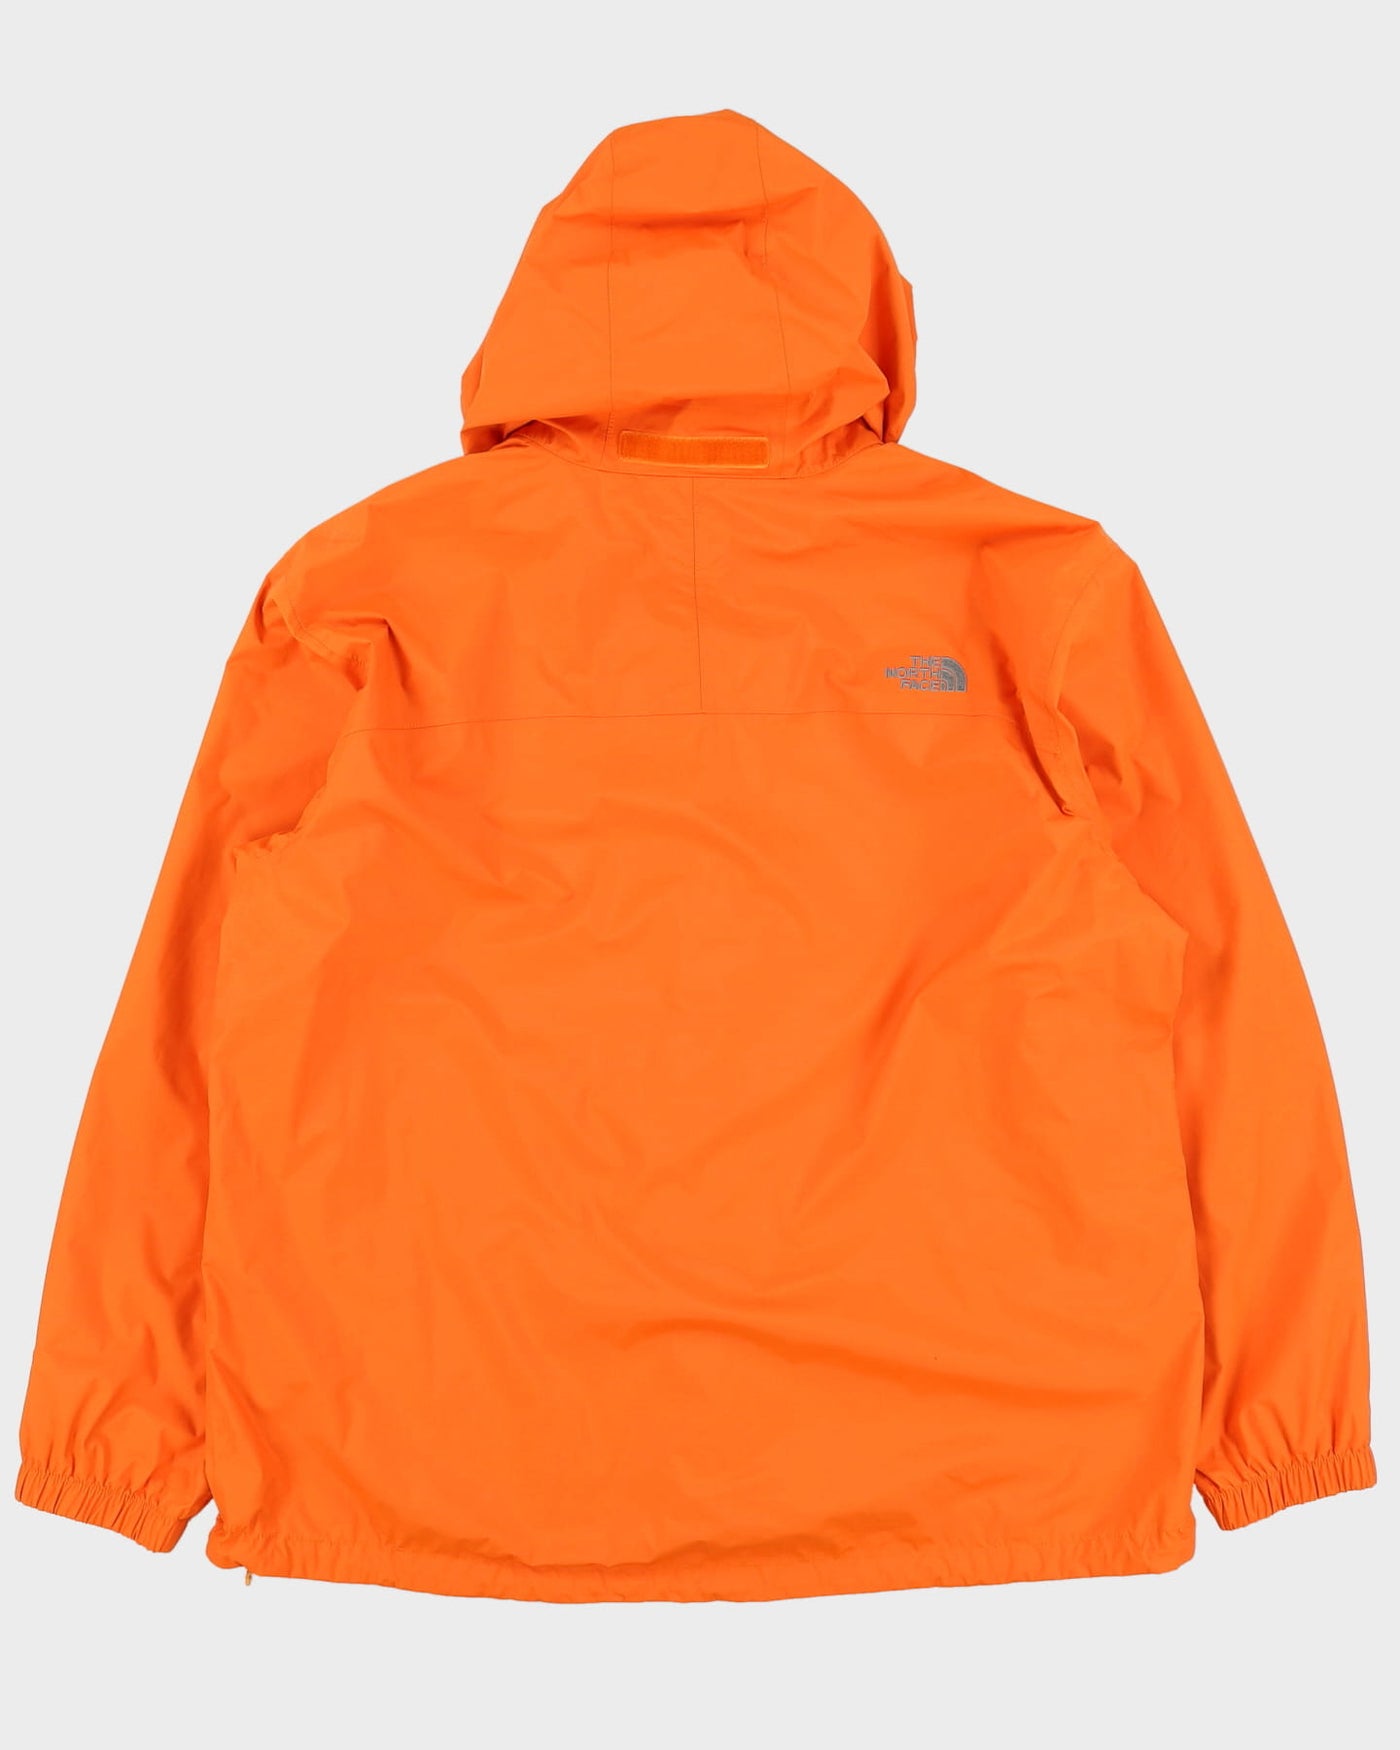 The North Face Orange Hooded Anorak Jacket - XL